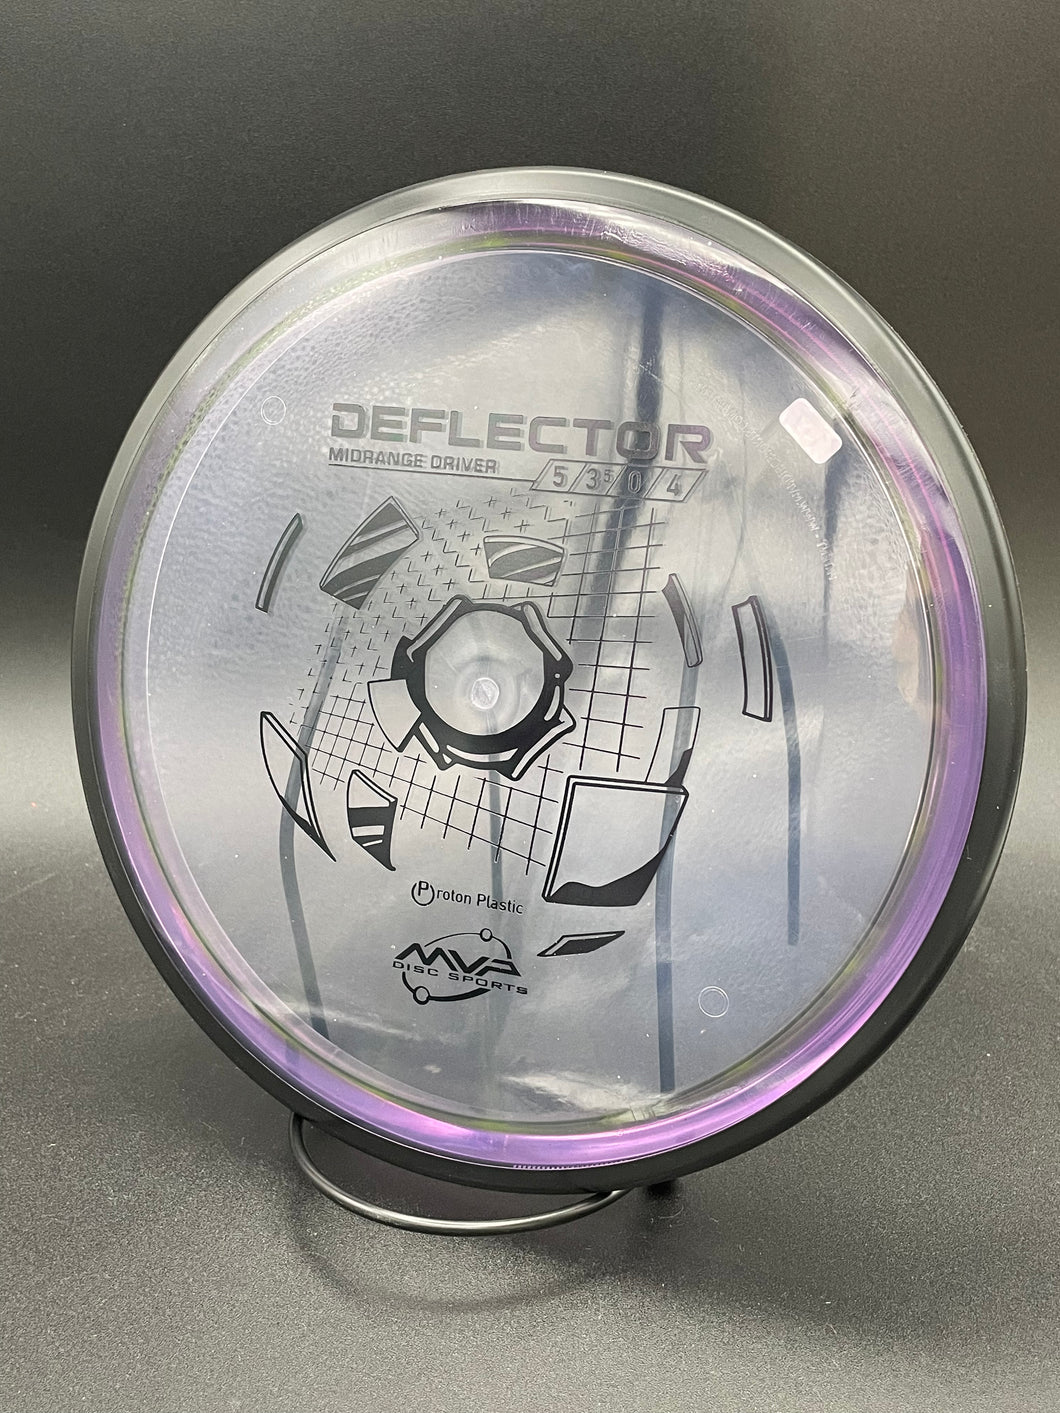 Deflector / MVP Discs / Proton